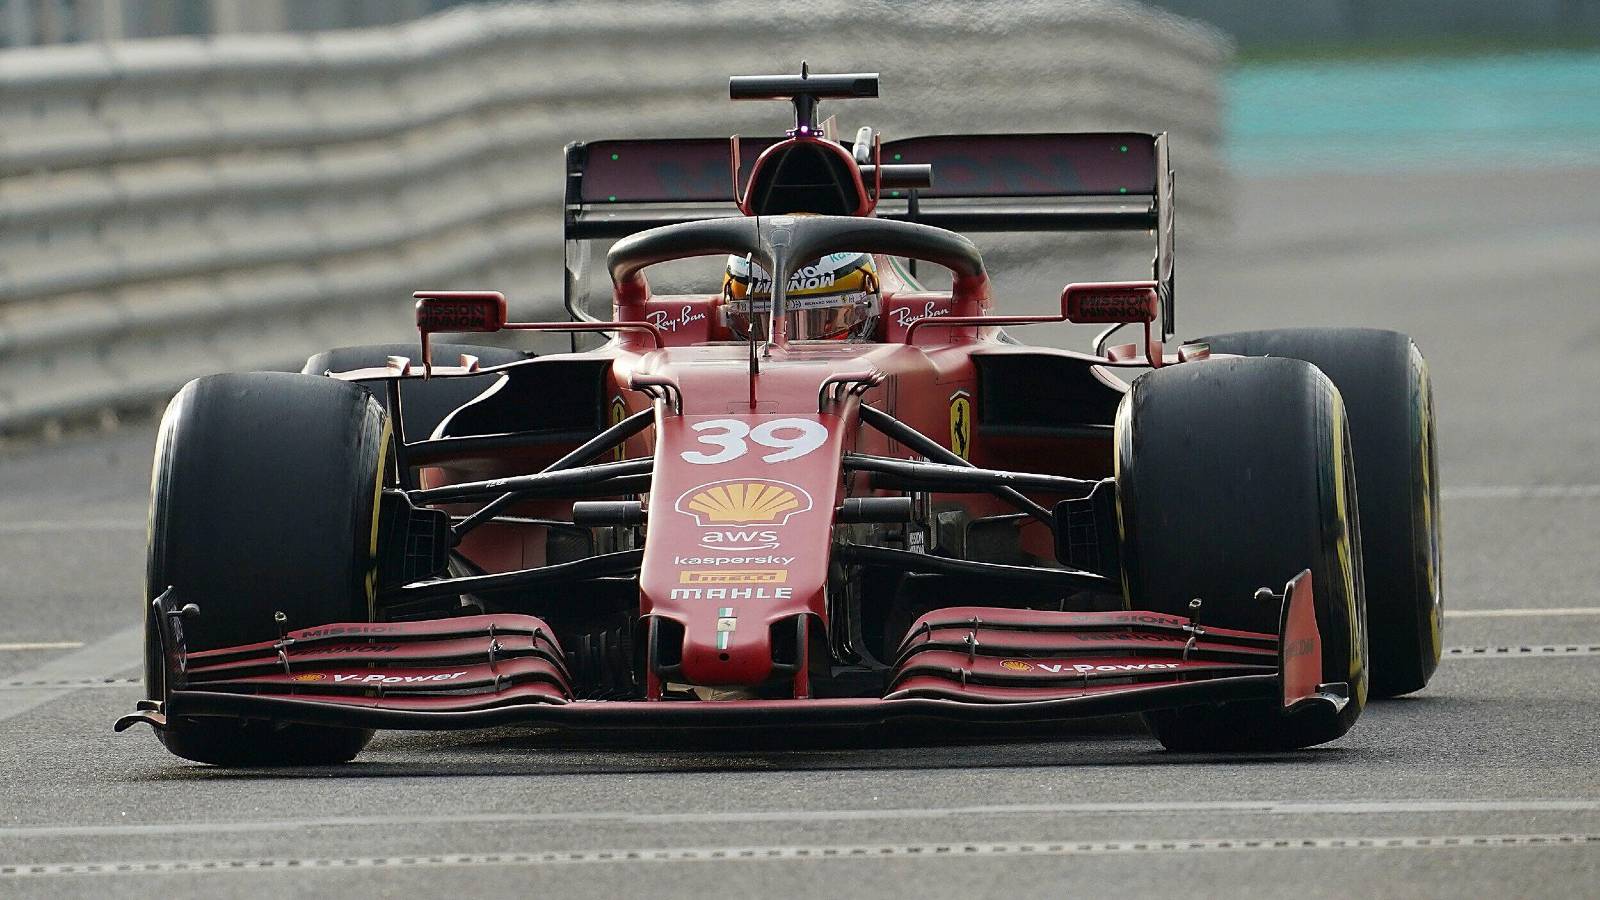 Robert Shwartzman driving the Ferrari in testing. Abu Dhabi, December 2021.